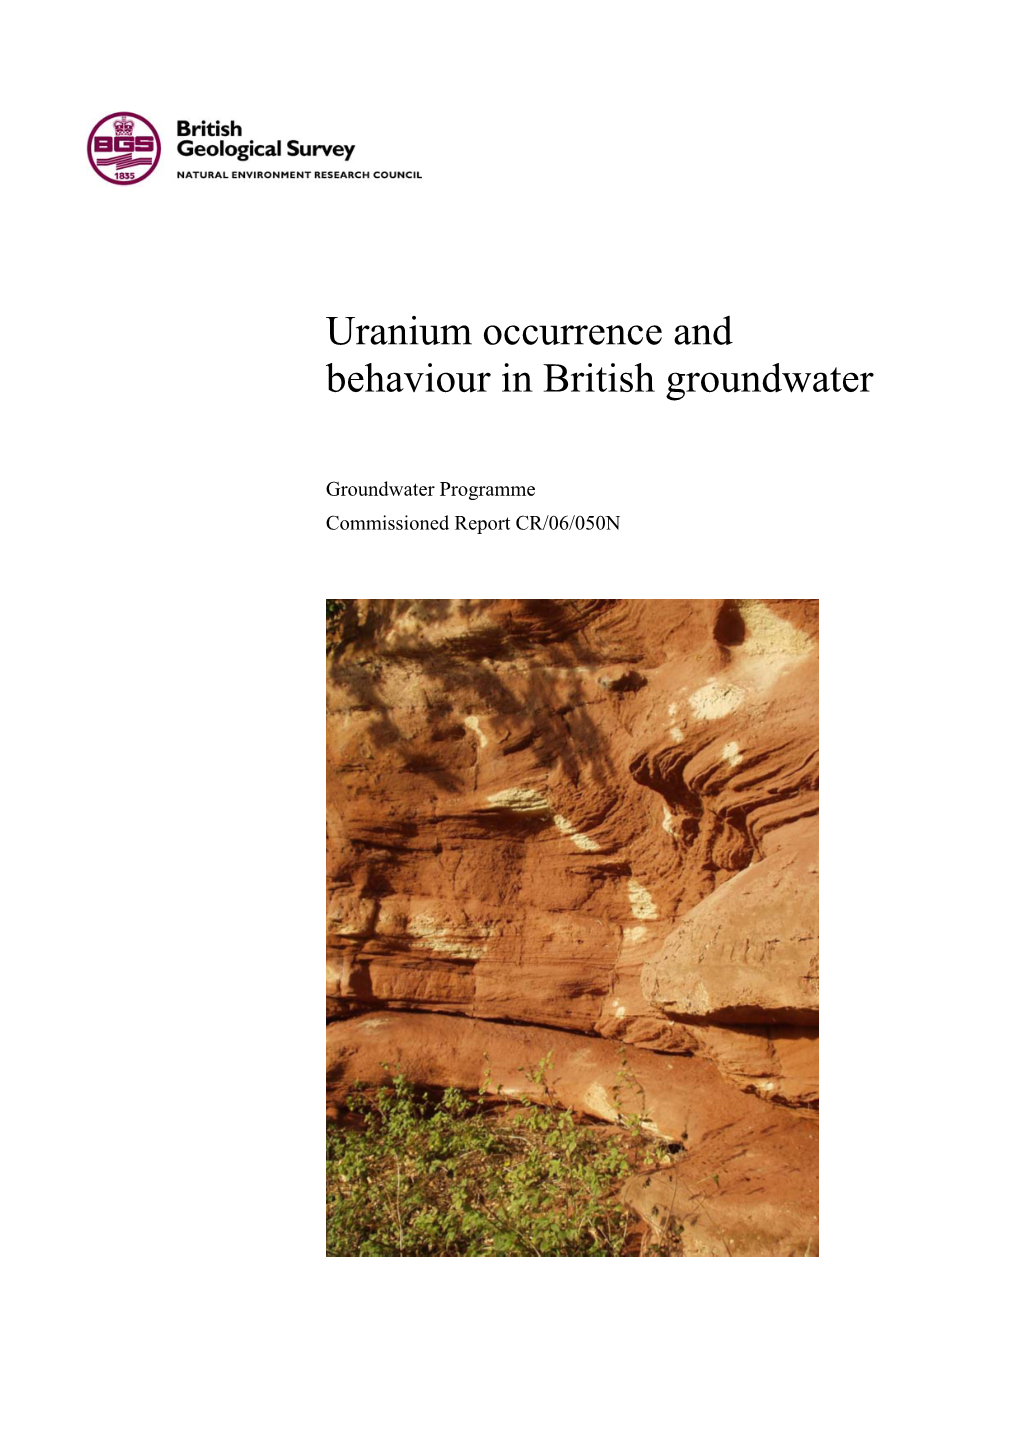 Uranium Occurrence and Behaviour in British Groundwater